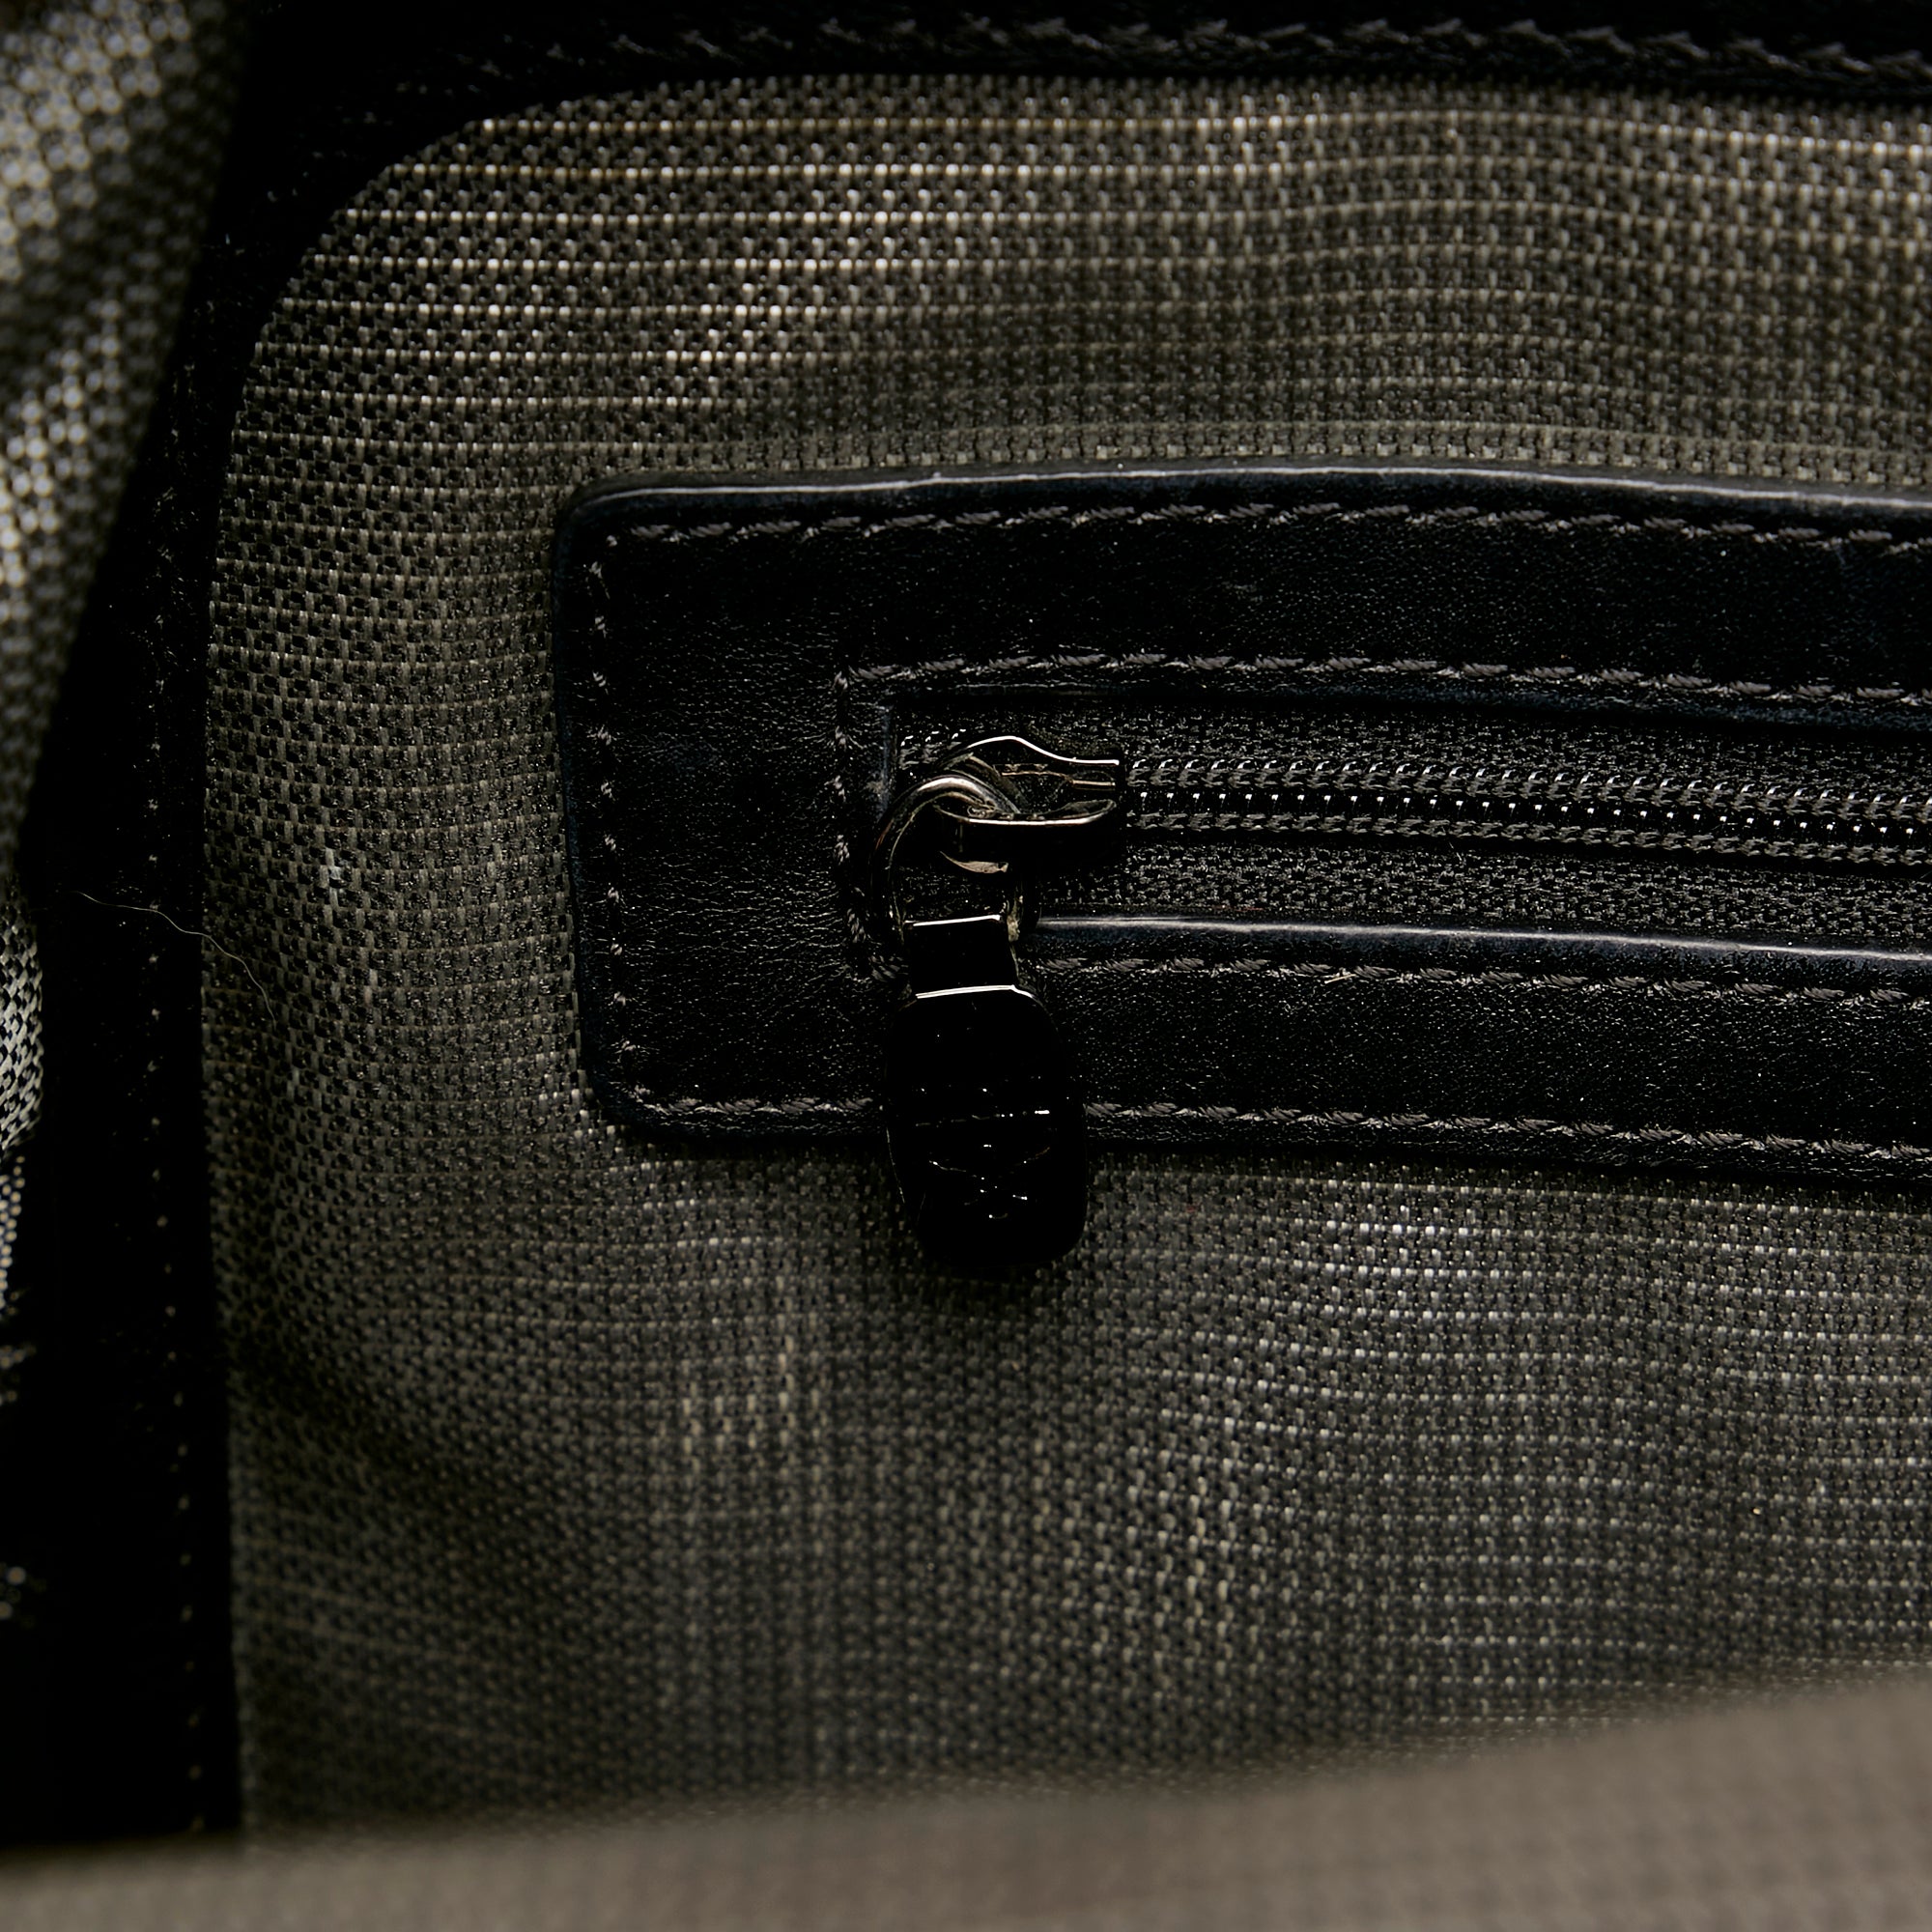 Red MCM Visetos Patent Leather Tote Bag – Designer Revival